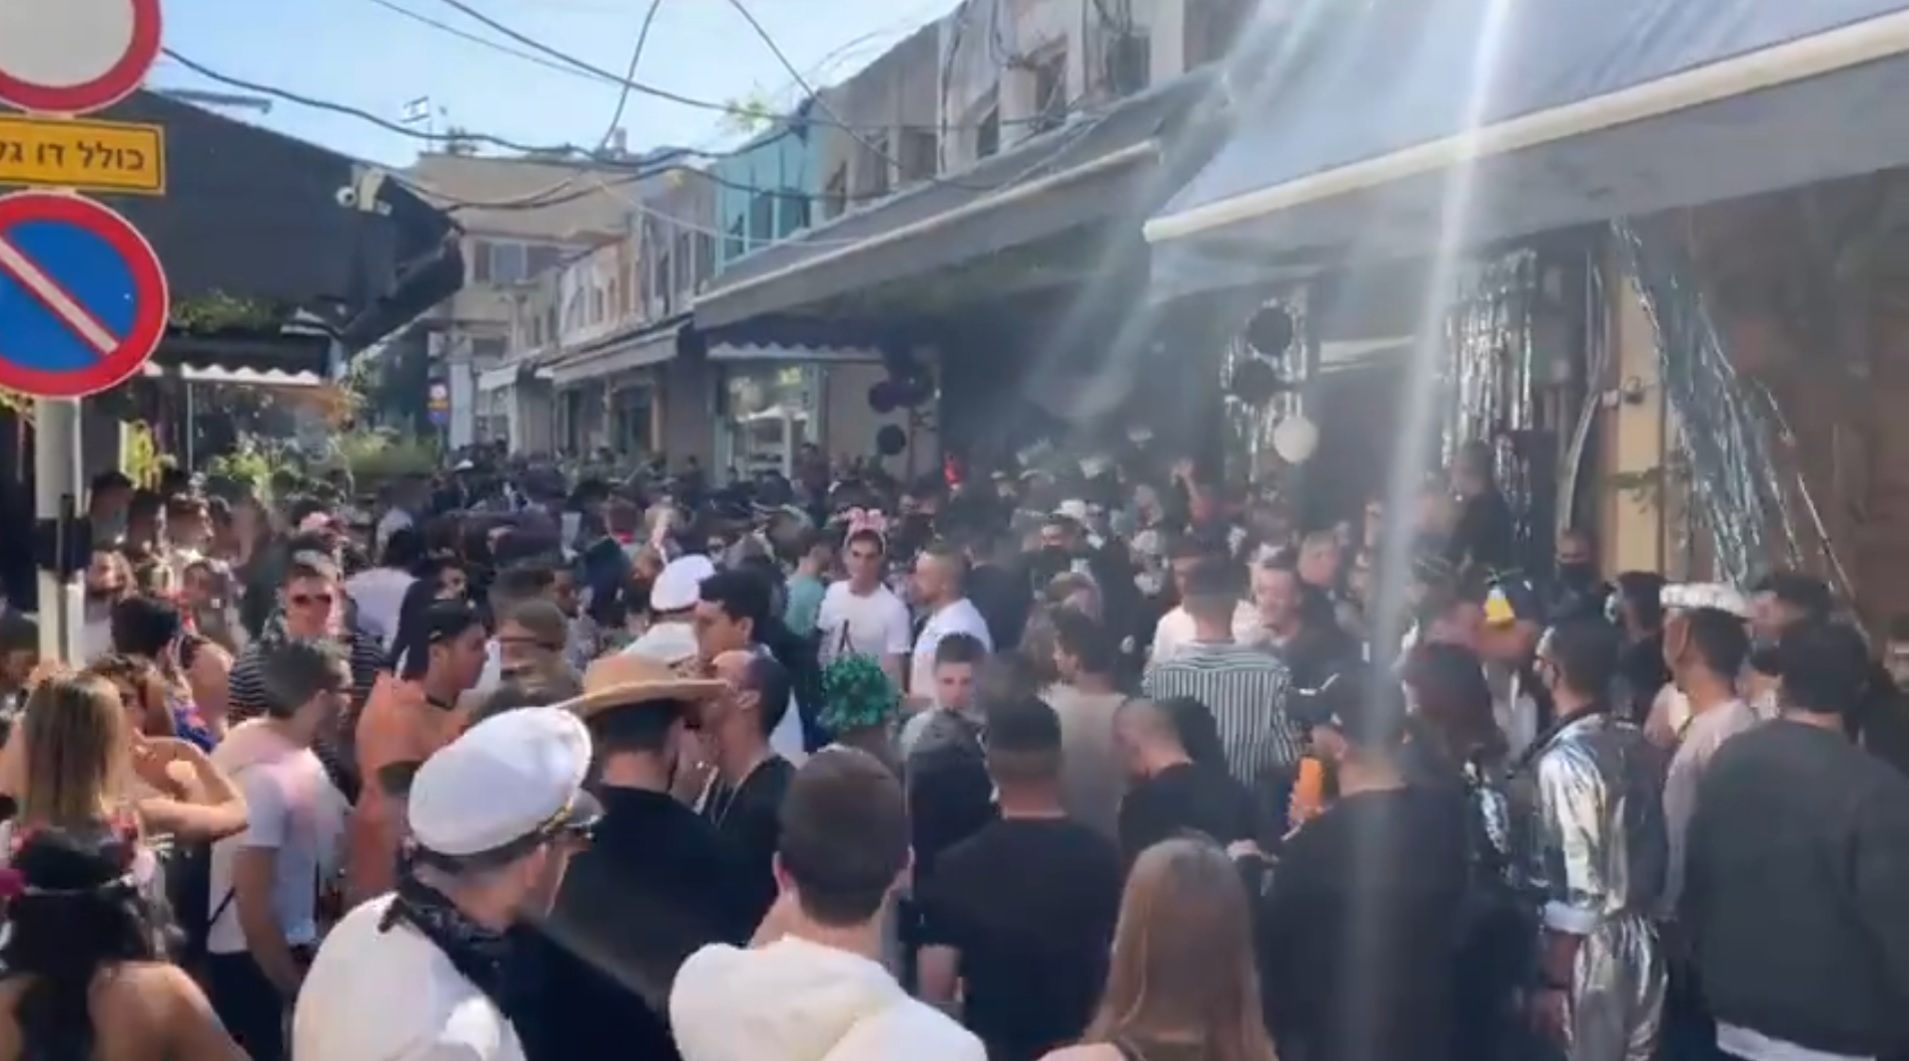 People celebrate the holiday of Purim in violation of coronavirus restrictions, at Jaffa’s Flea Market in Tel Aviv-Jaffa, February 27, 2021 (video screenshot)